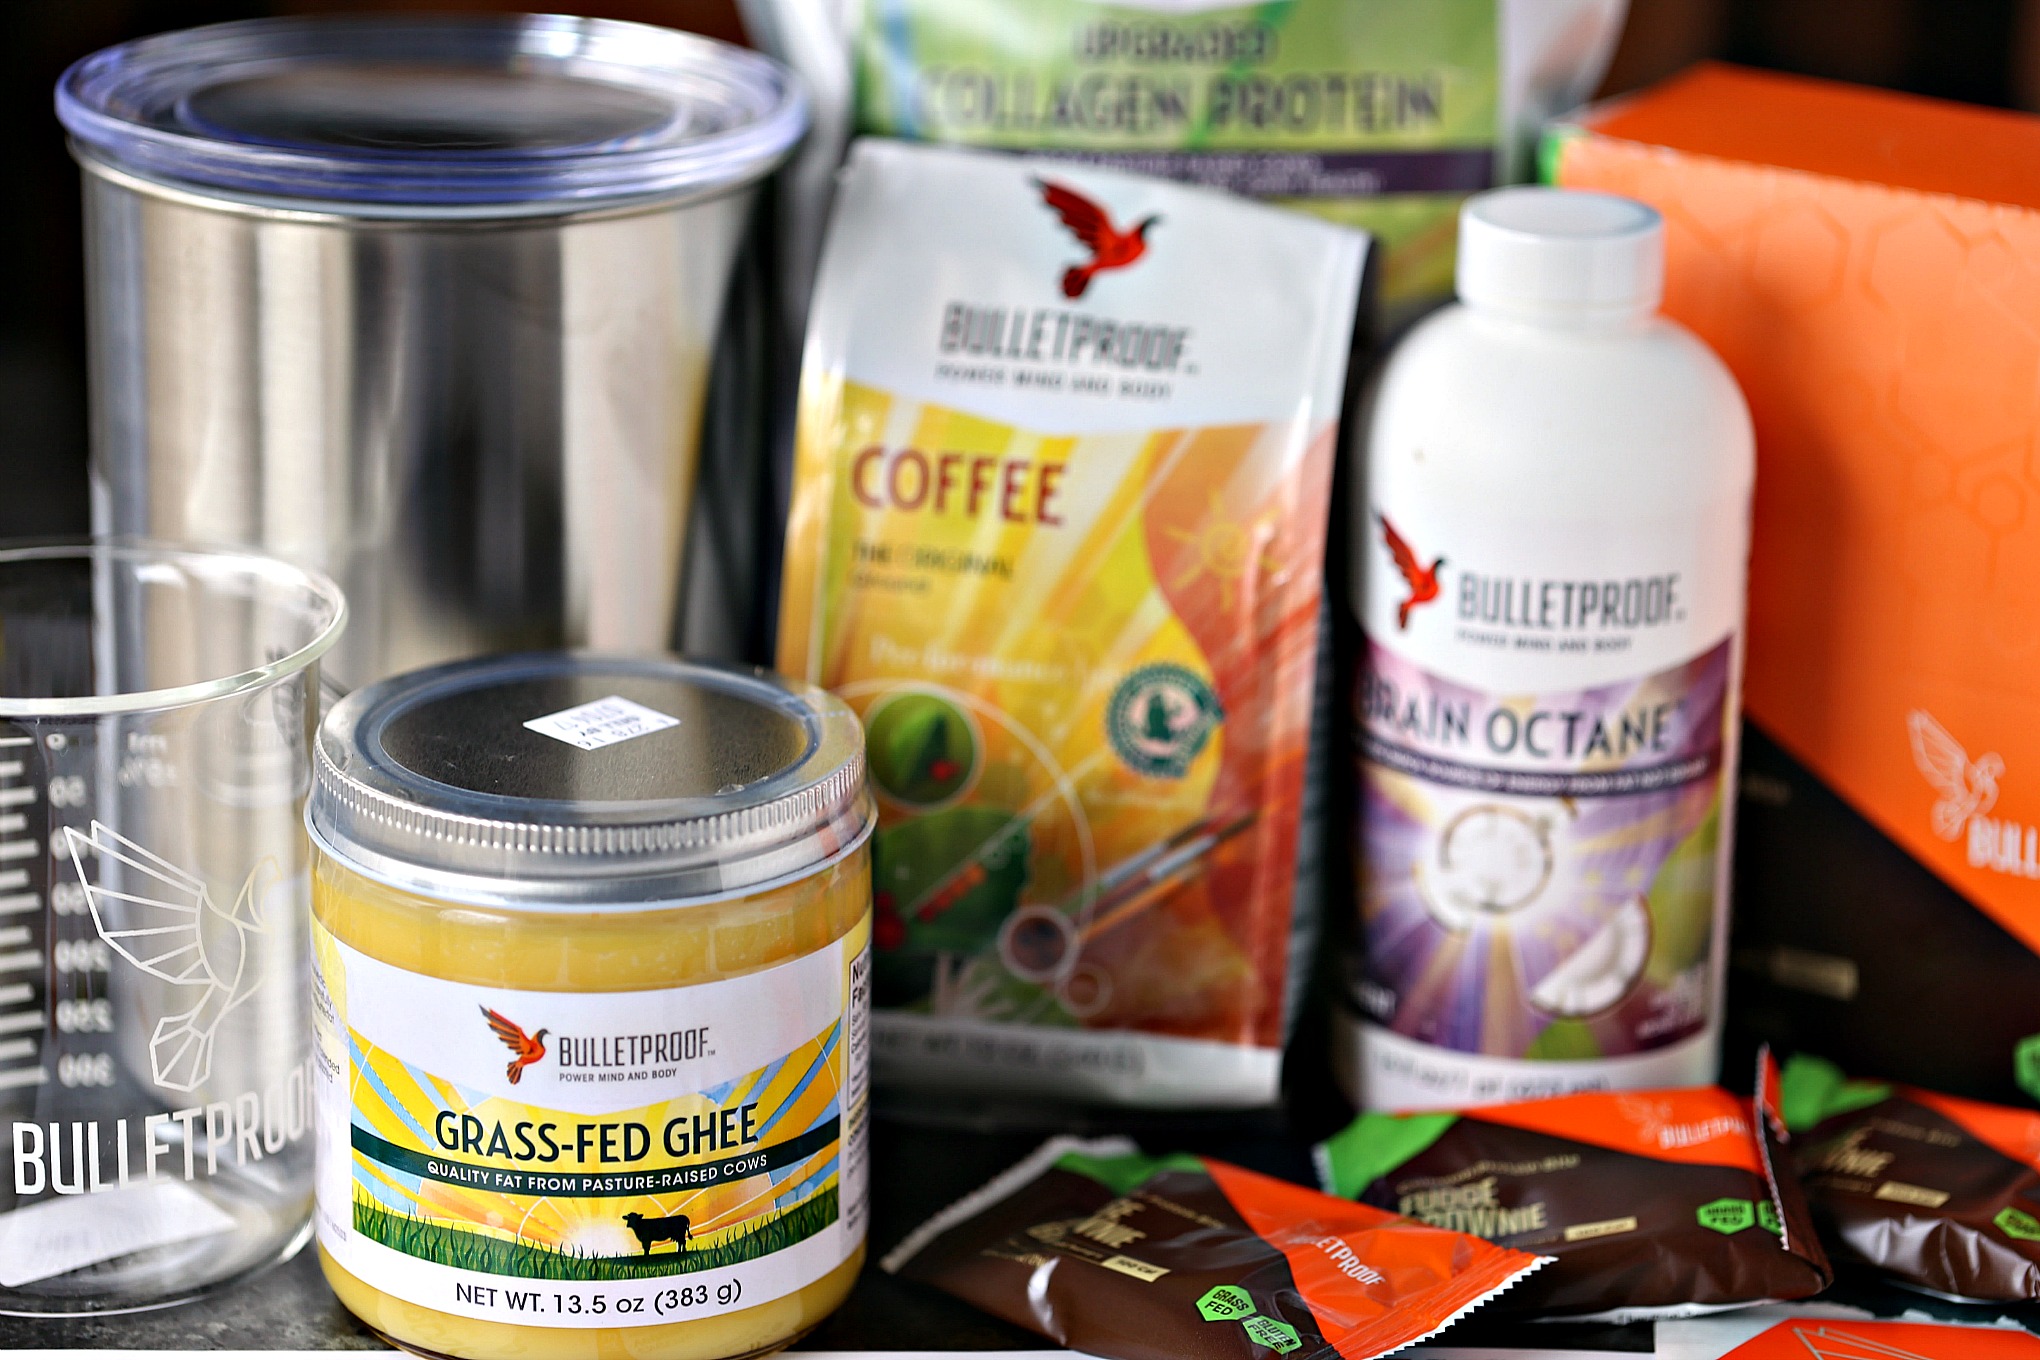 Bulletproof Coffee Products